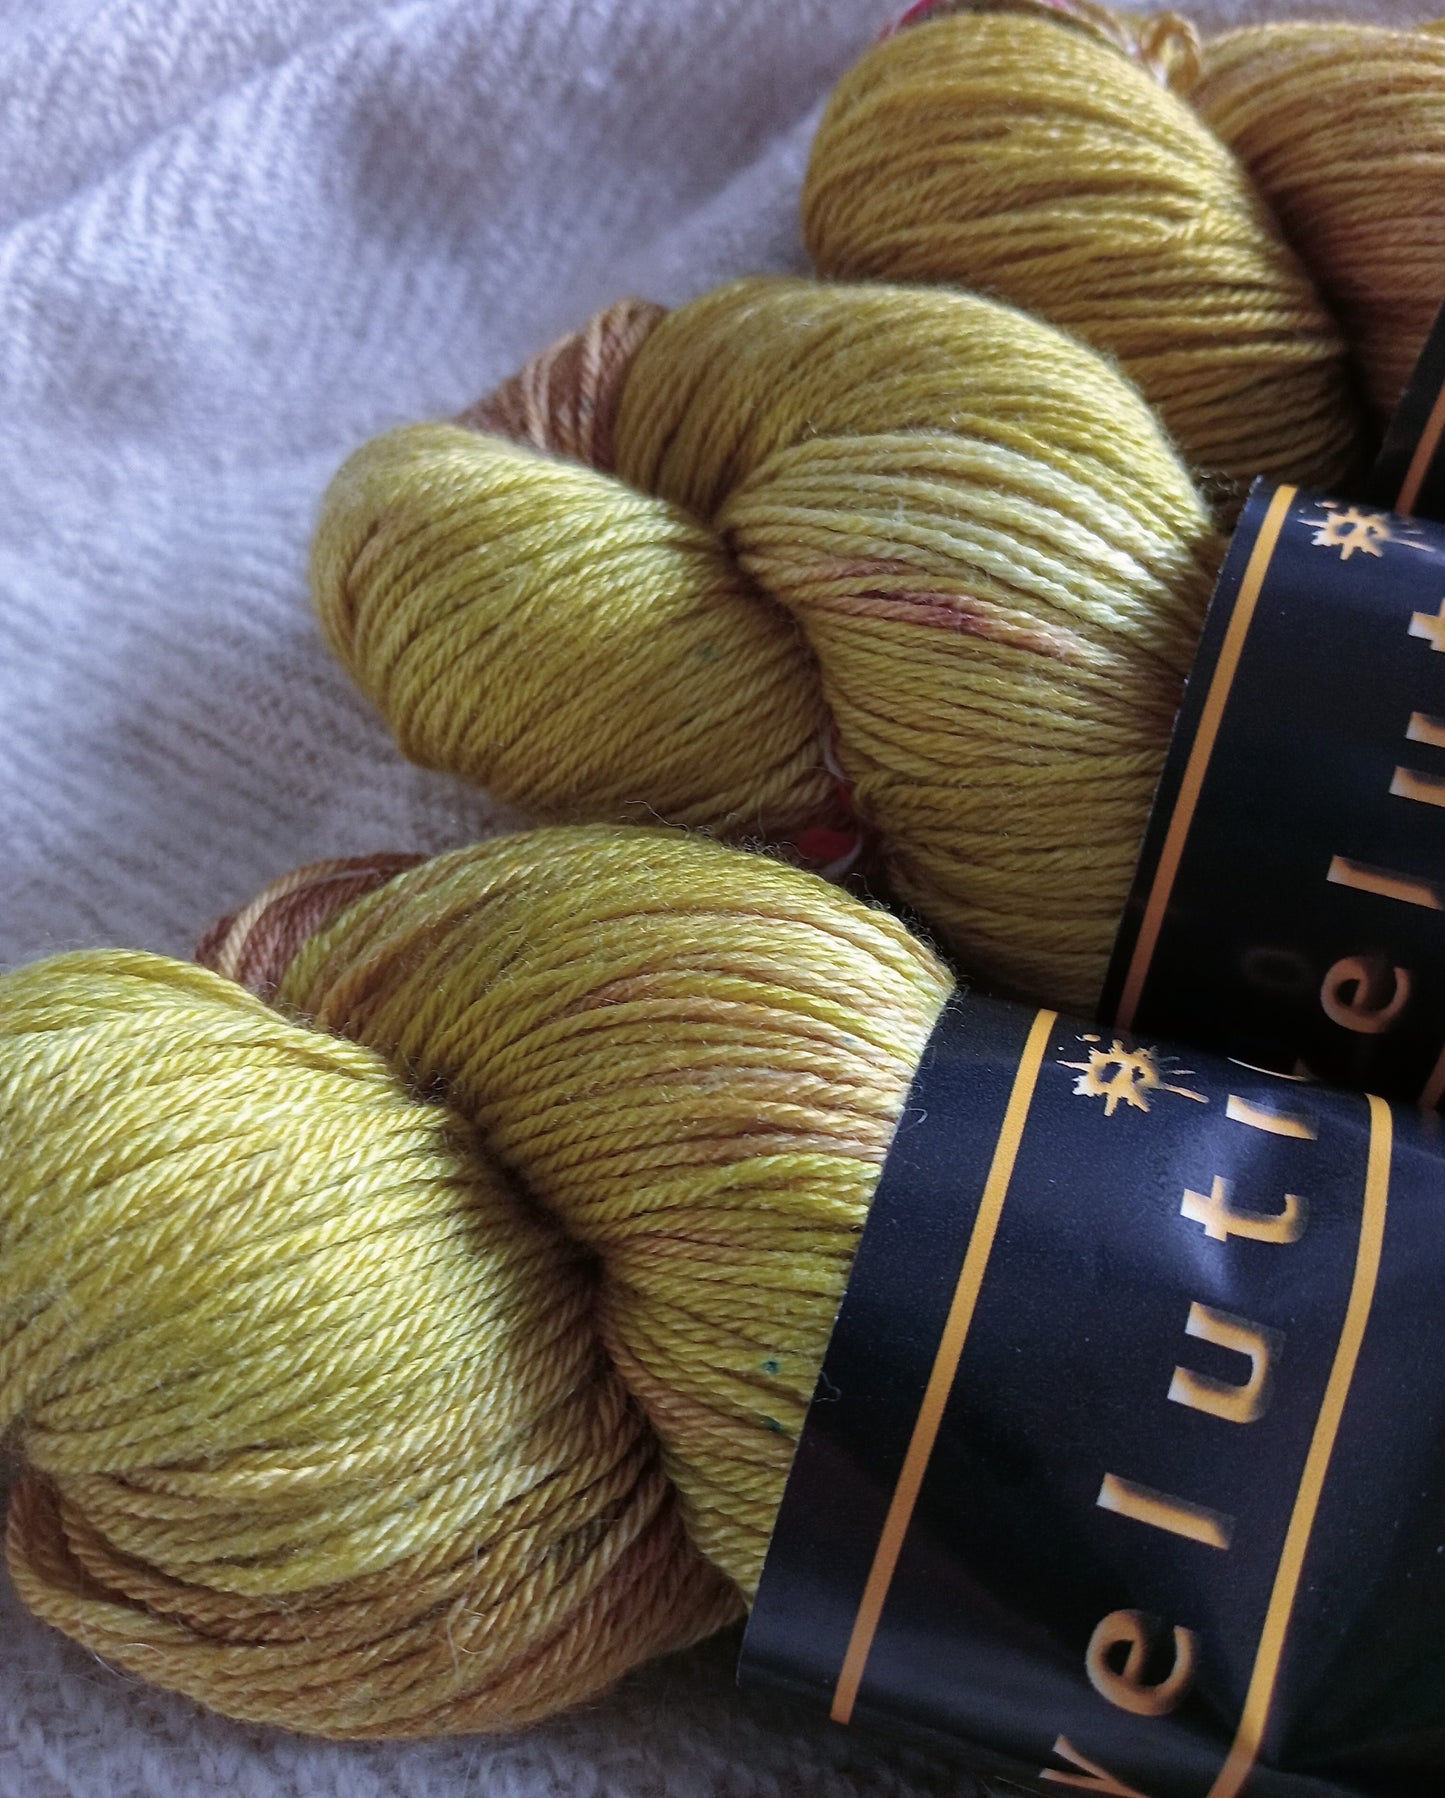 100G Merino/Silk hand dyed4 ply Yarn- "Golden Grove"